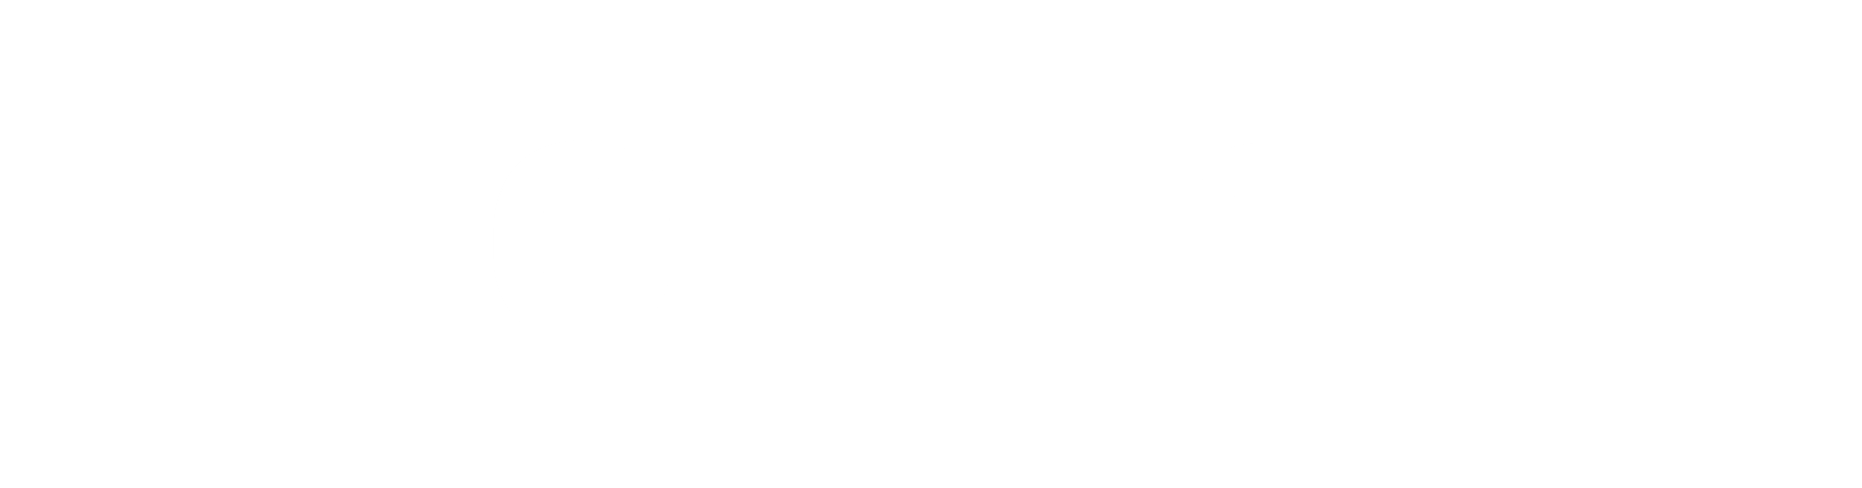 eCornell Logo - White